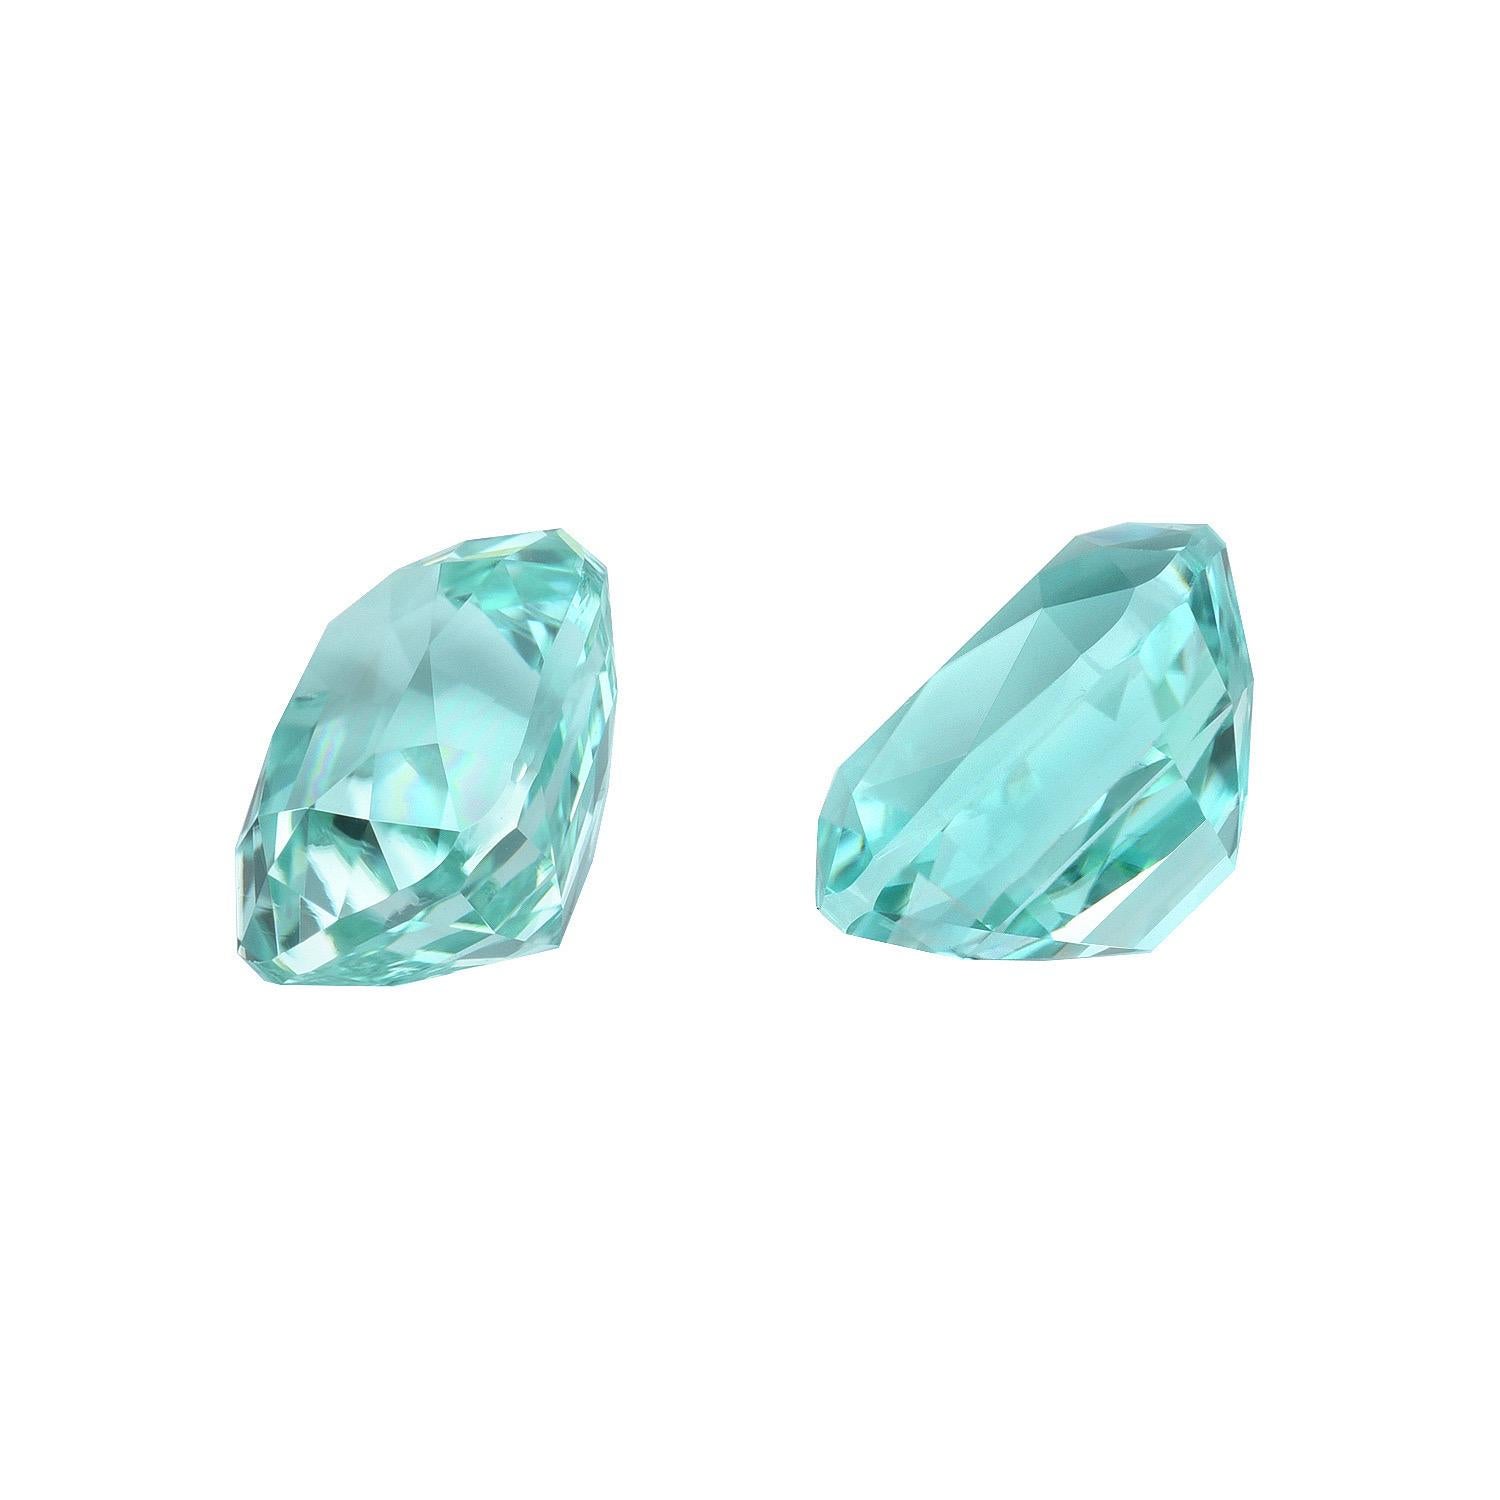 Cushion Cut Blue Green Tourmaline Earring Gemstone Pair 3.61 Carat Cushion Loose Gems